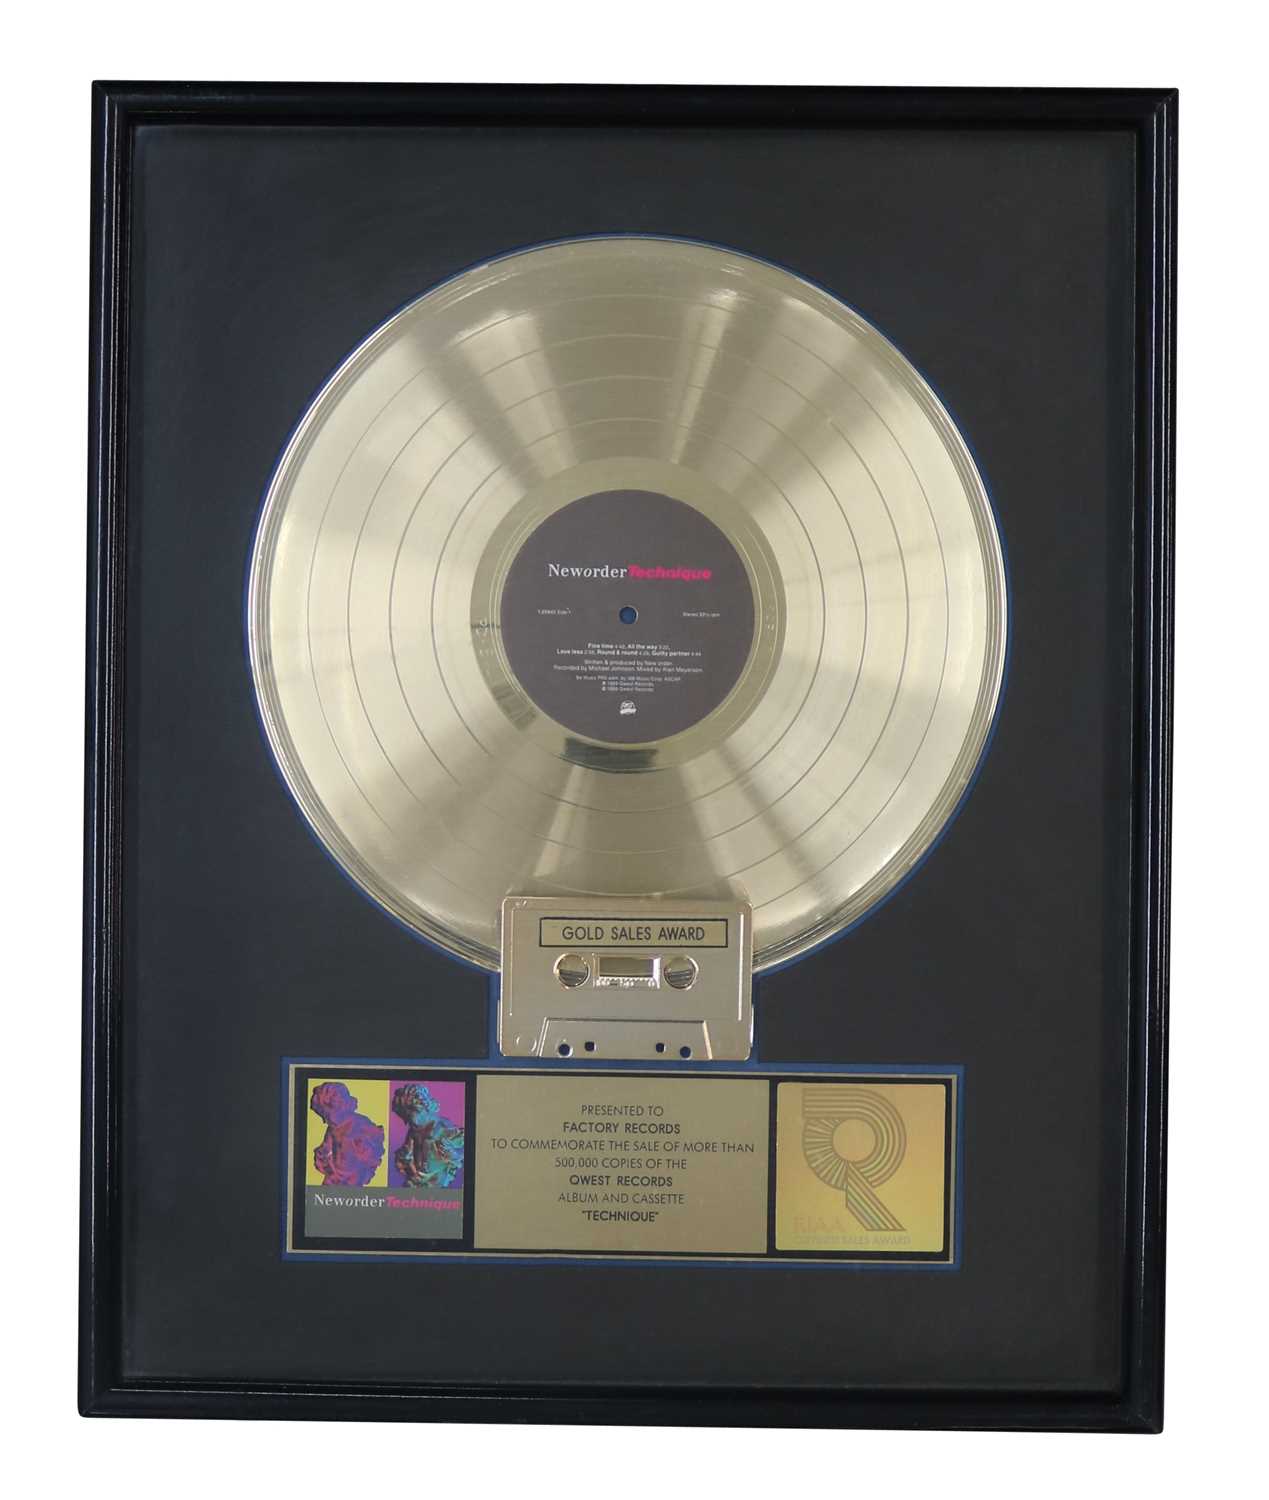 Lot 54 - NEW ORDER RIAA GOLD AWARD FOR TECHNIQUE